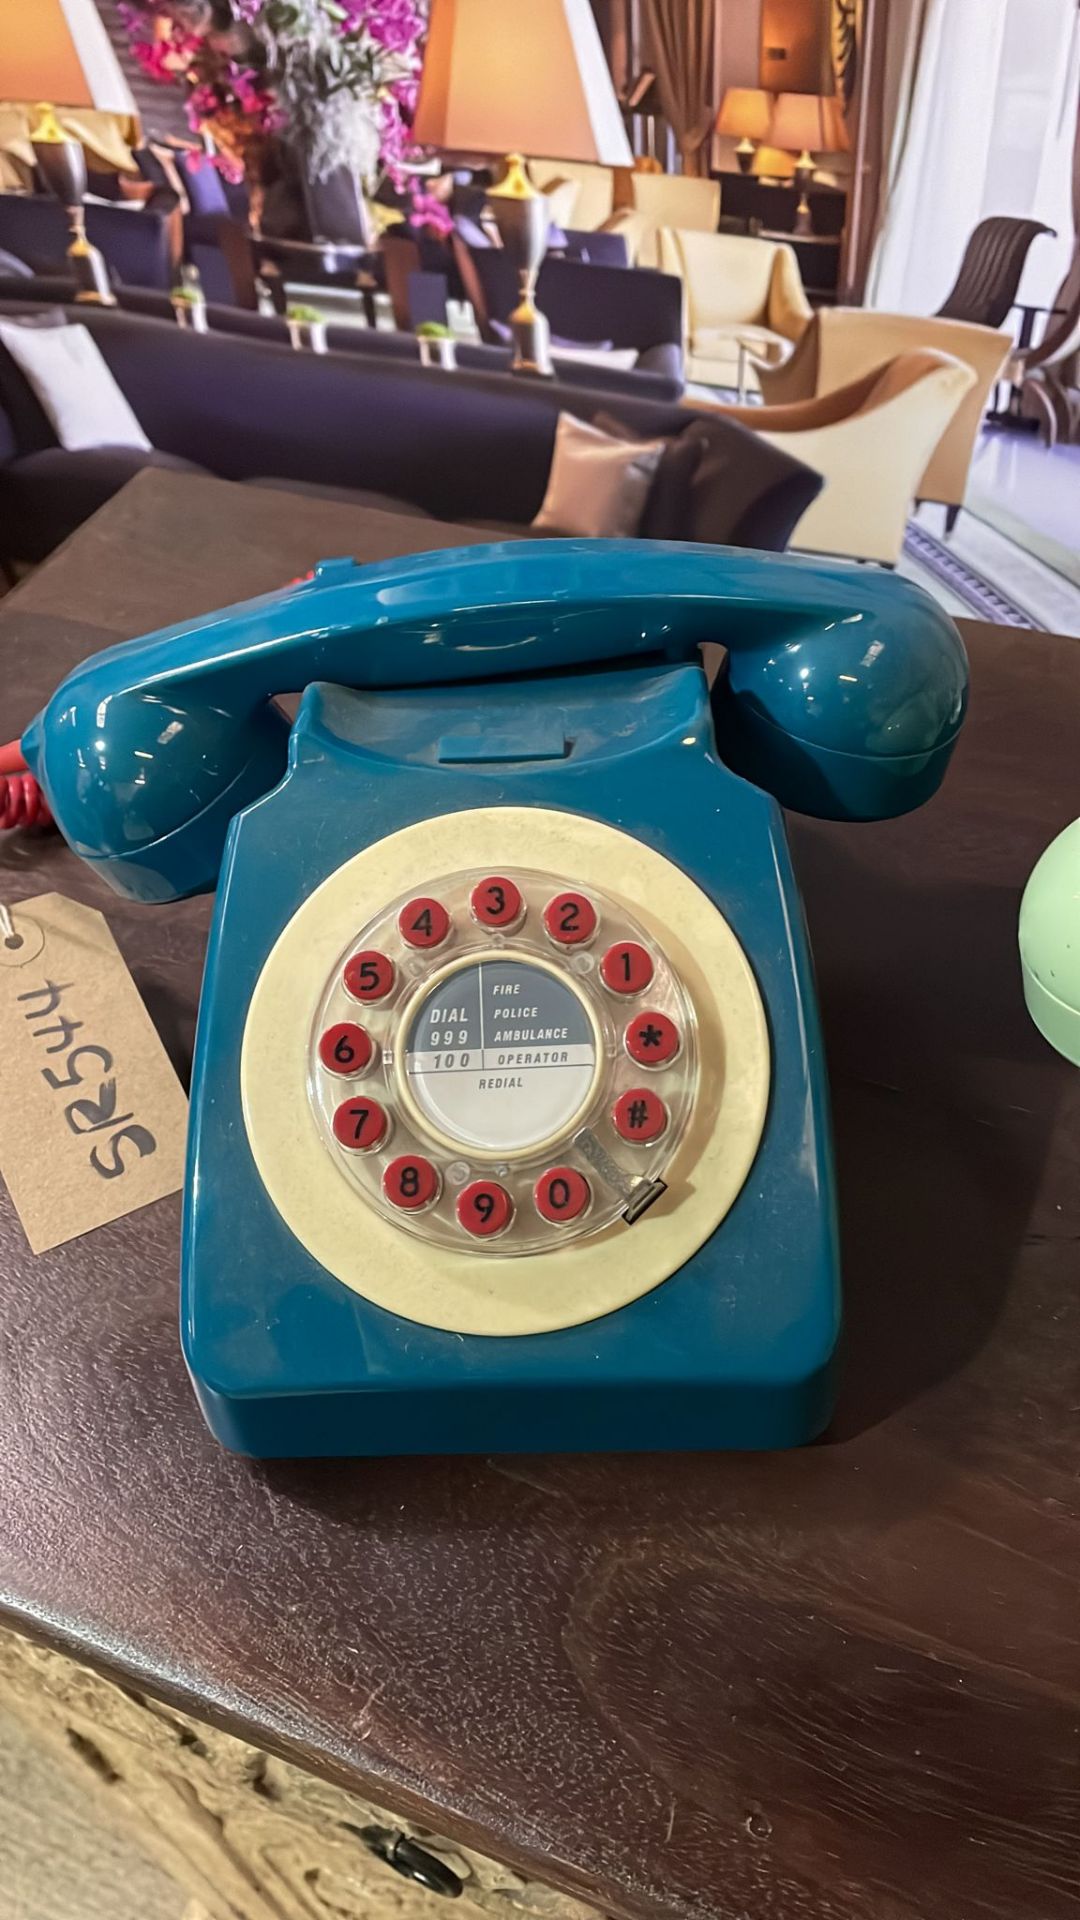 3 x Wild and Wolf Retro GPO 746 Rotary 1970s-Style Retro Landline Telephone, Classic Telephone